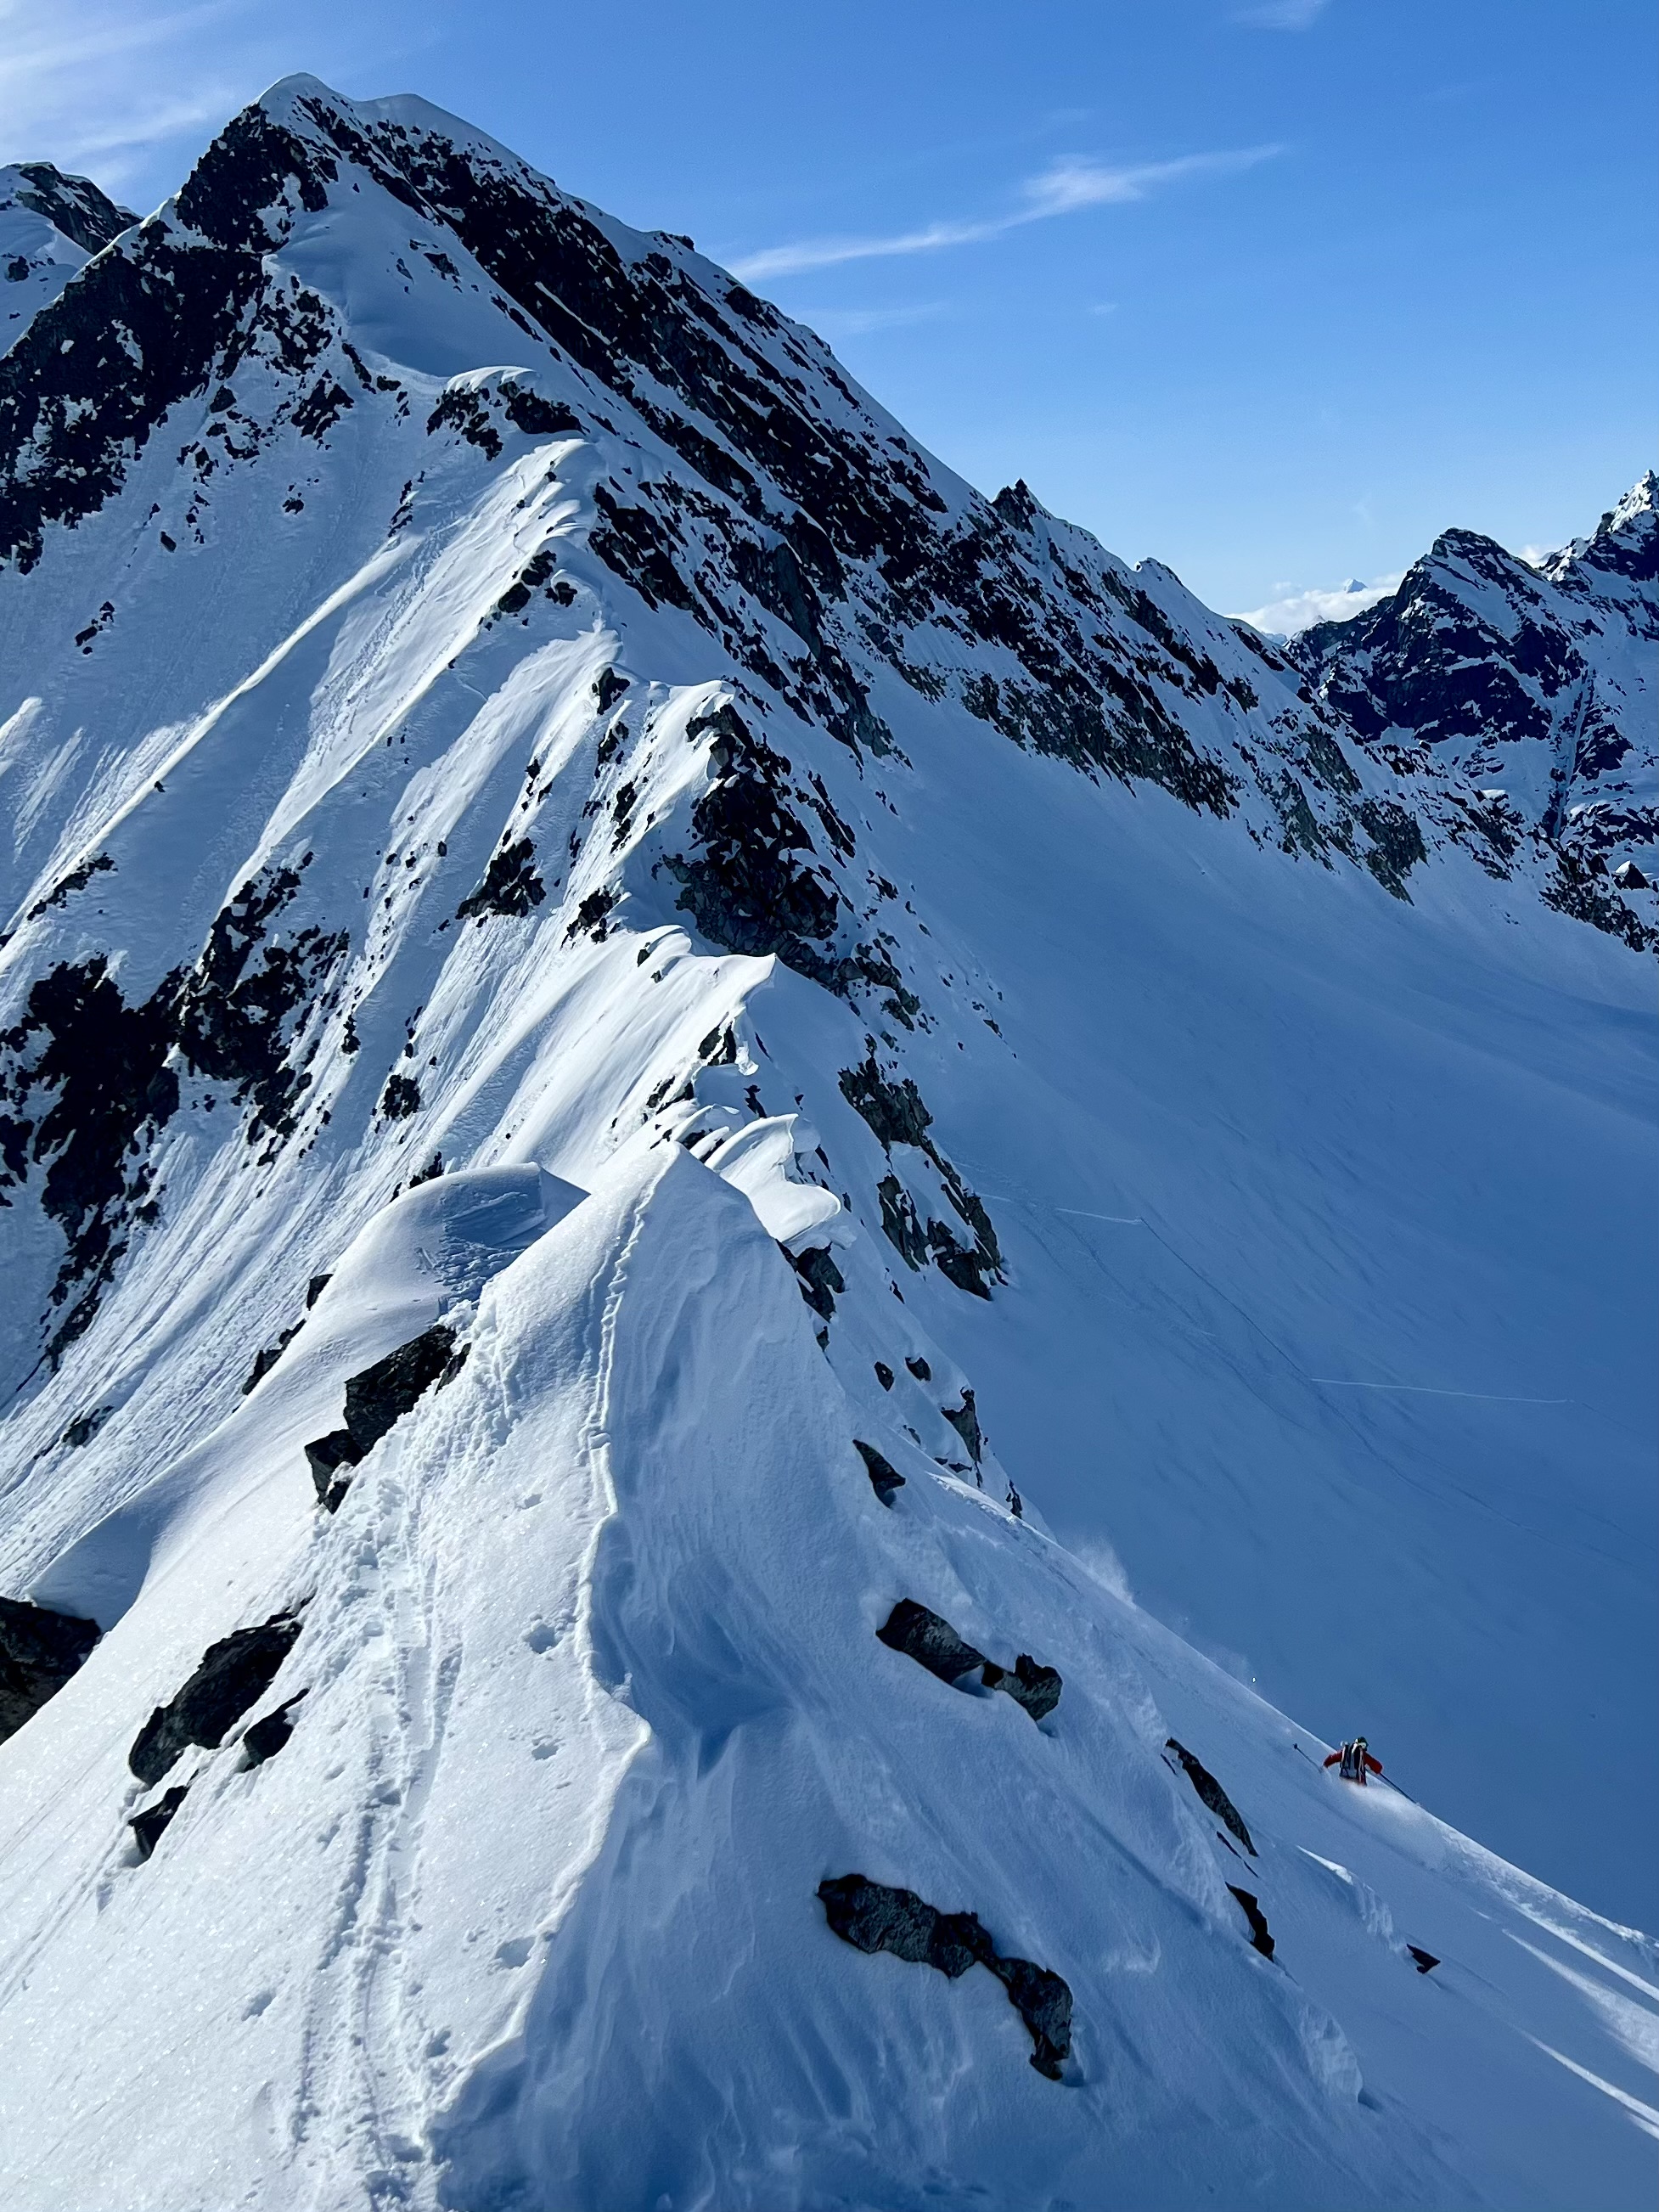 Corniced ridge with ski tracks in the snow